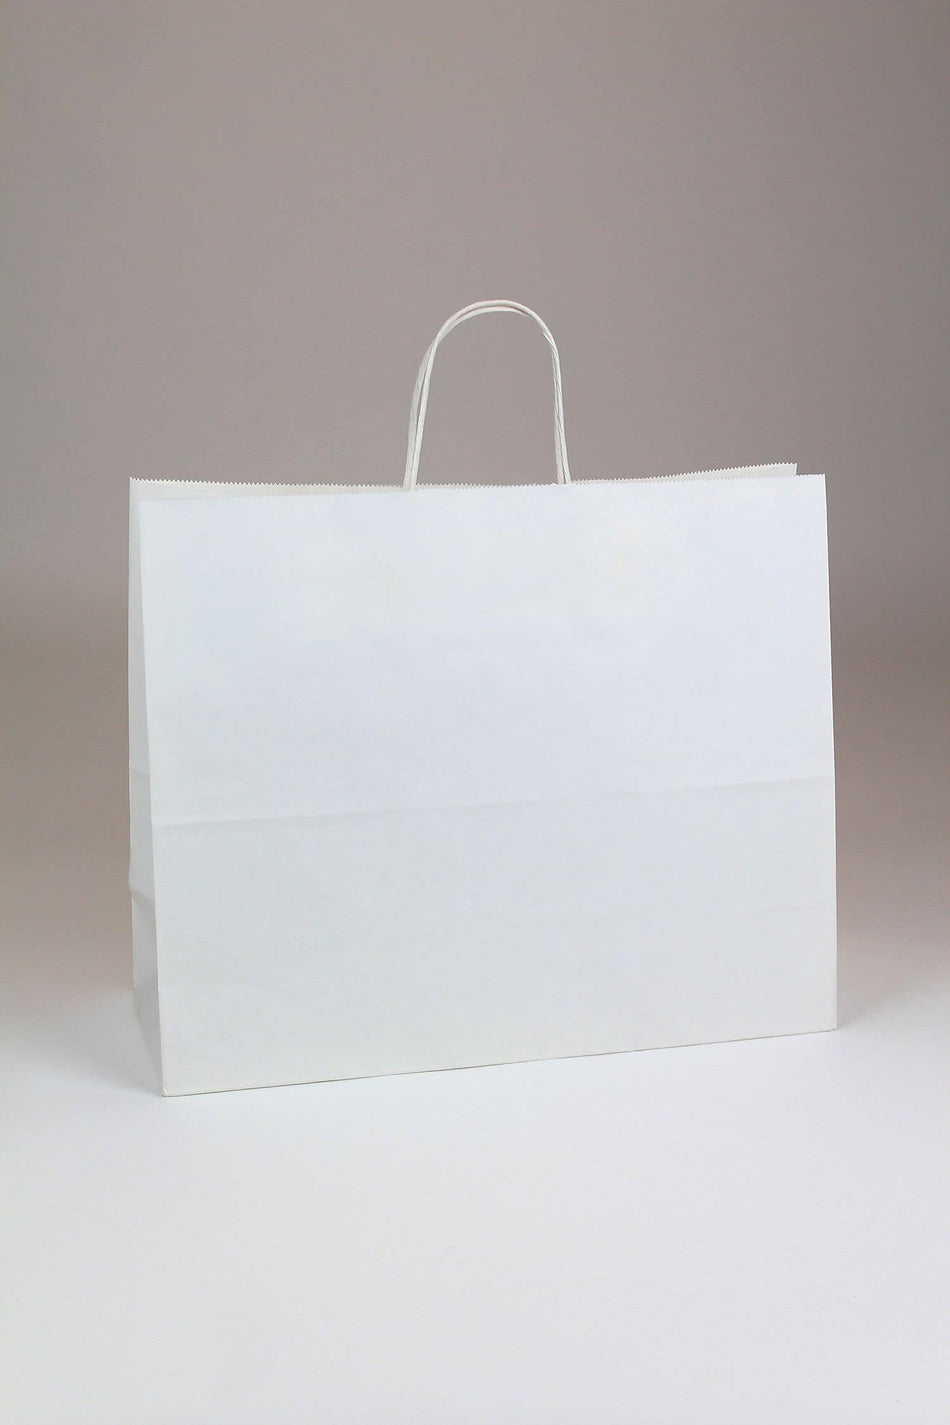 Vouge Shopper 13" x 16" x 6" Kraft Paper Shopping Bags, White, 250/Carton